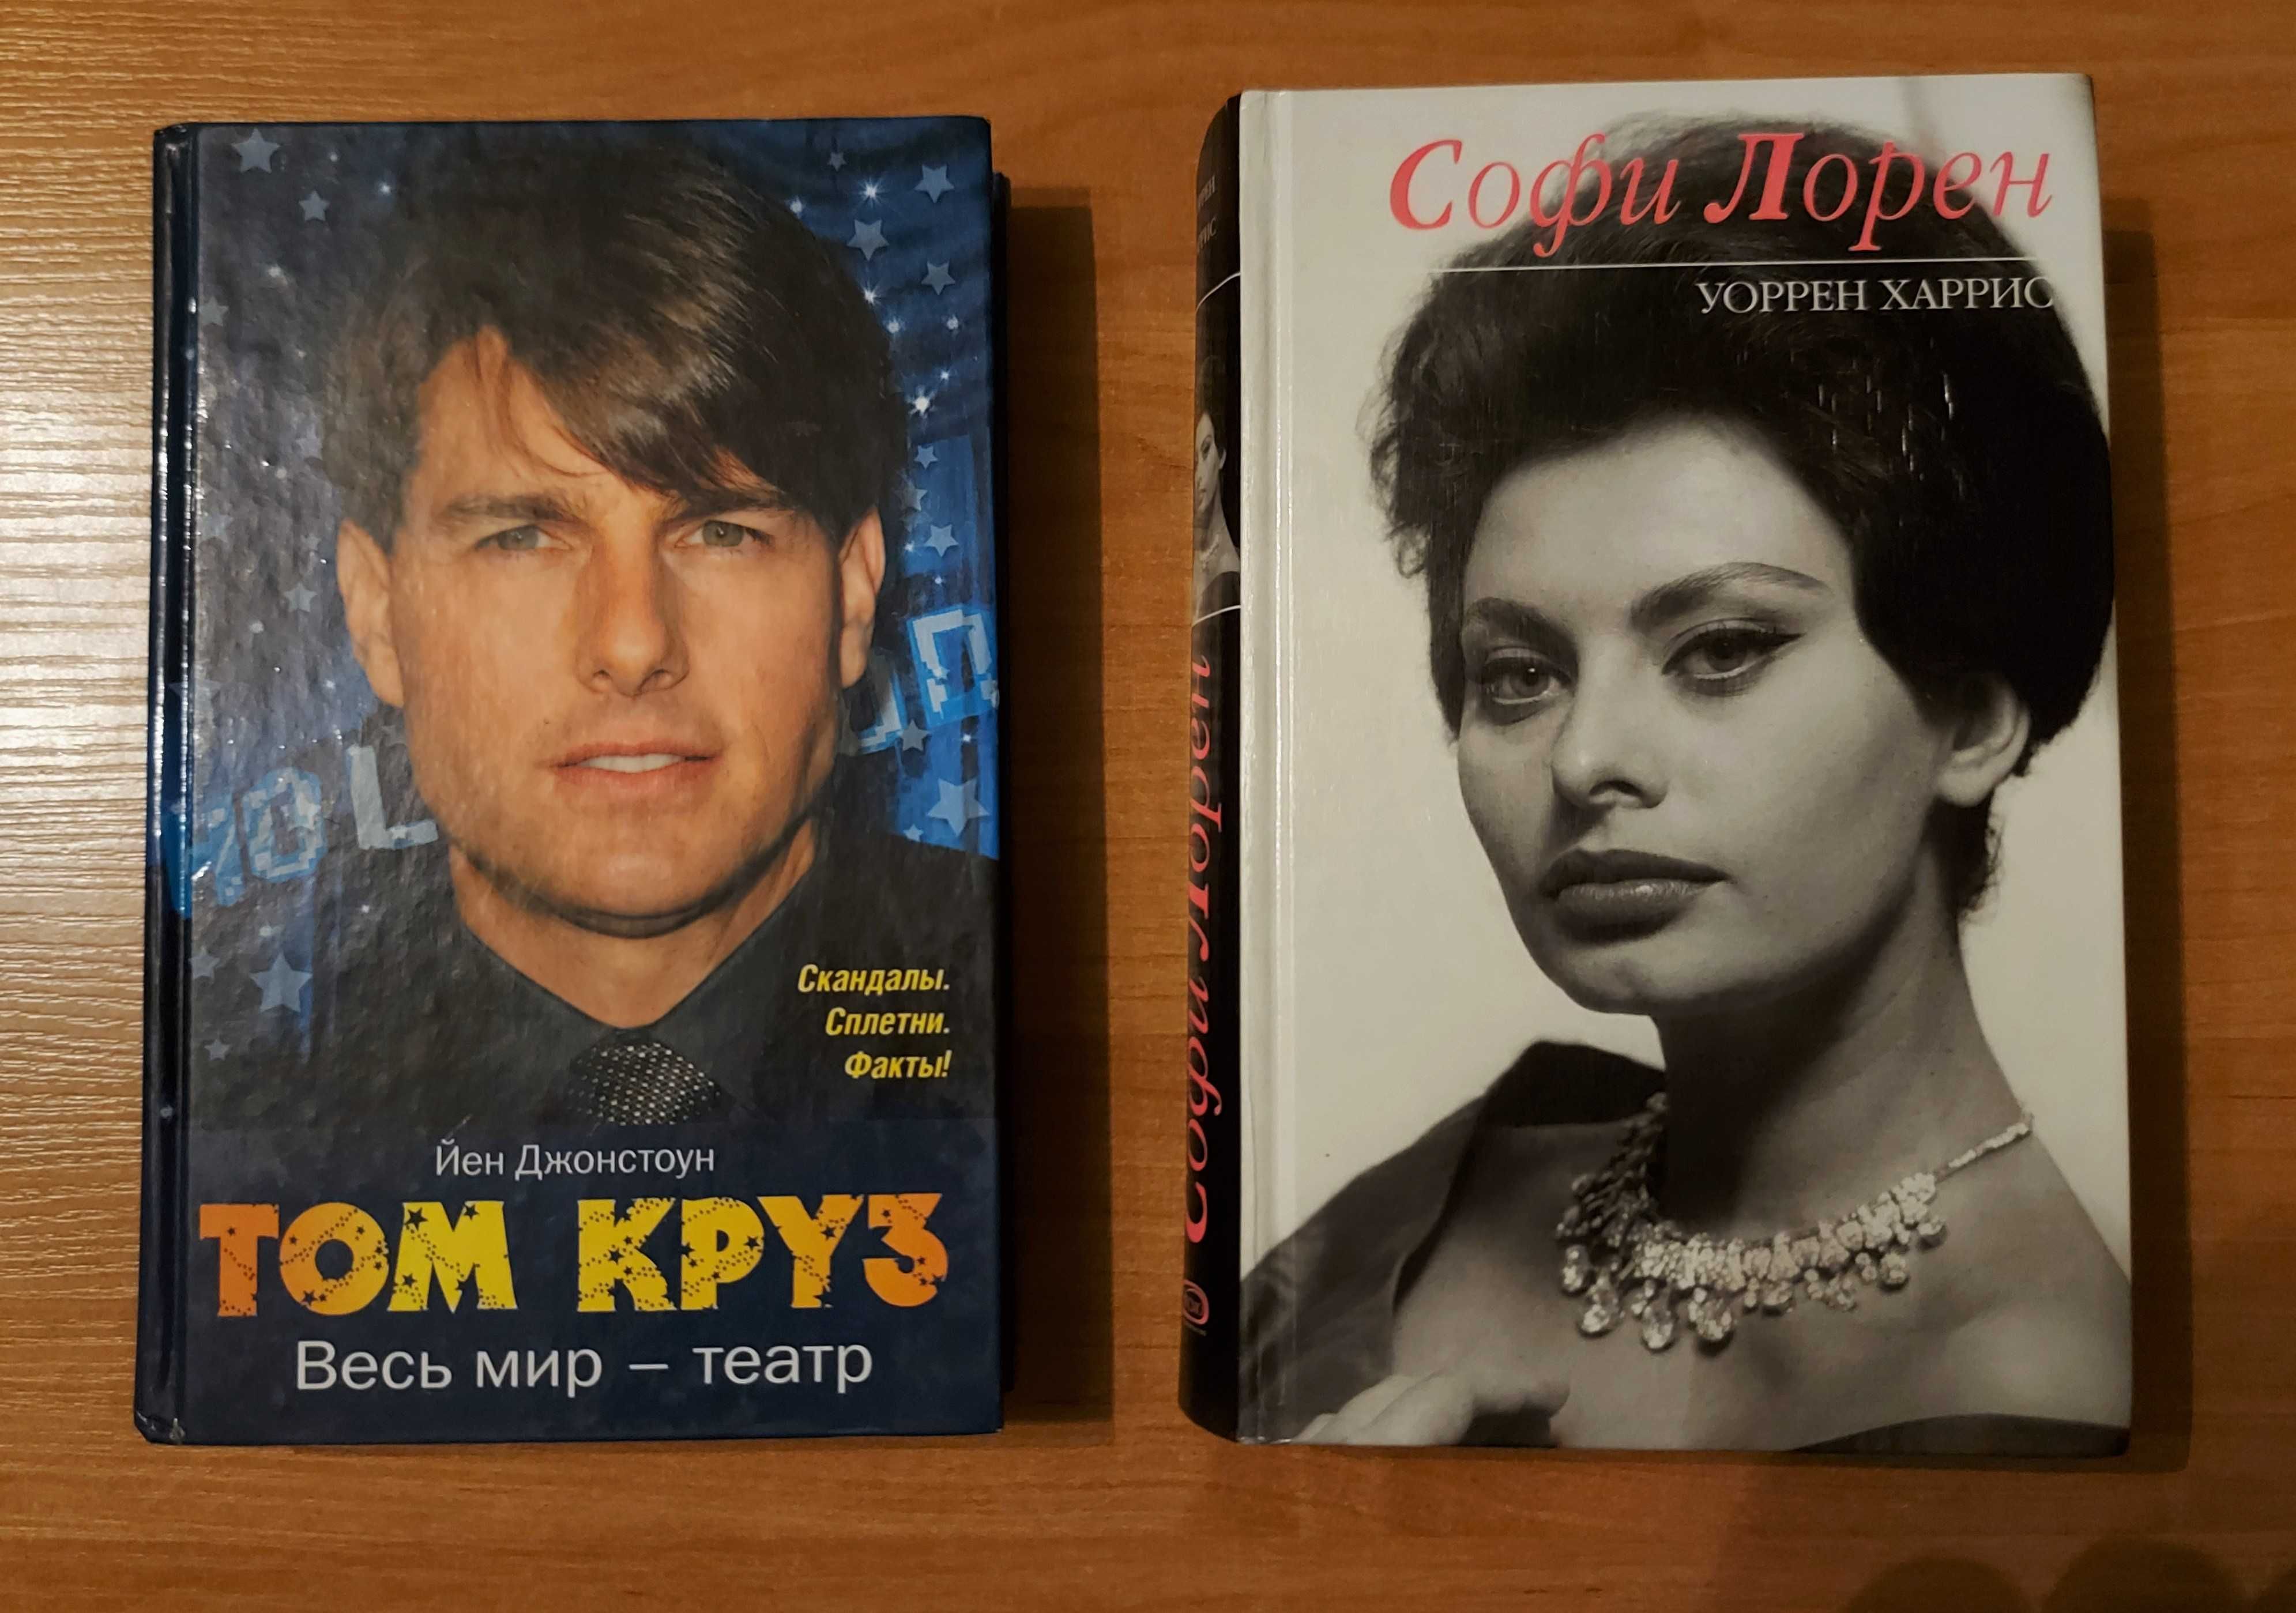 Две книги о кинозвездах (Том Круз, Софи Лорен)